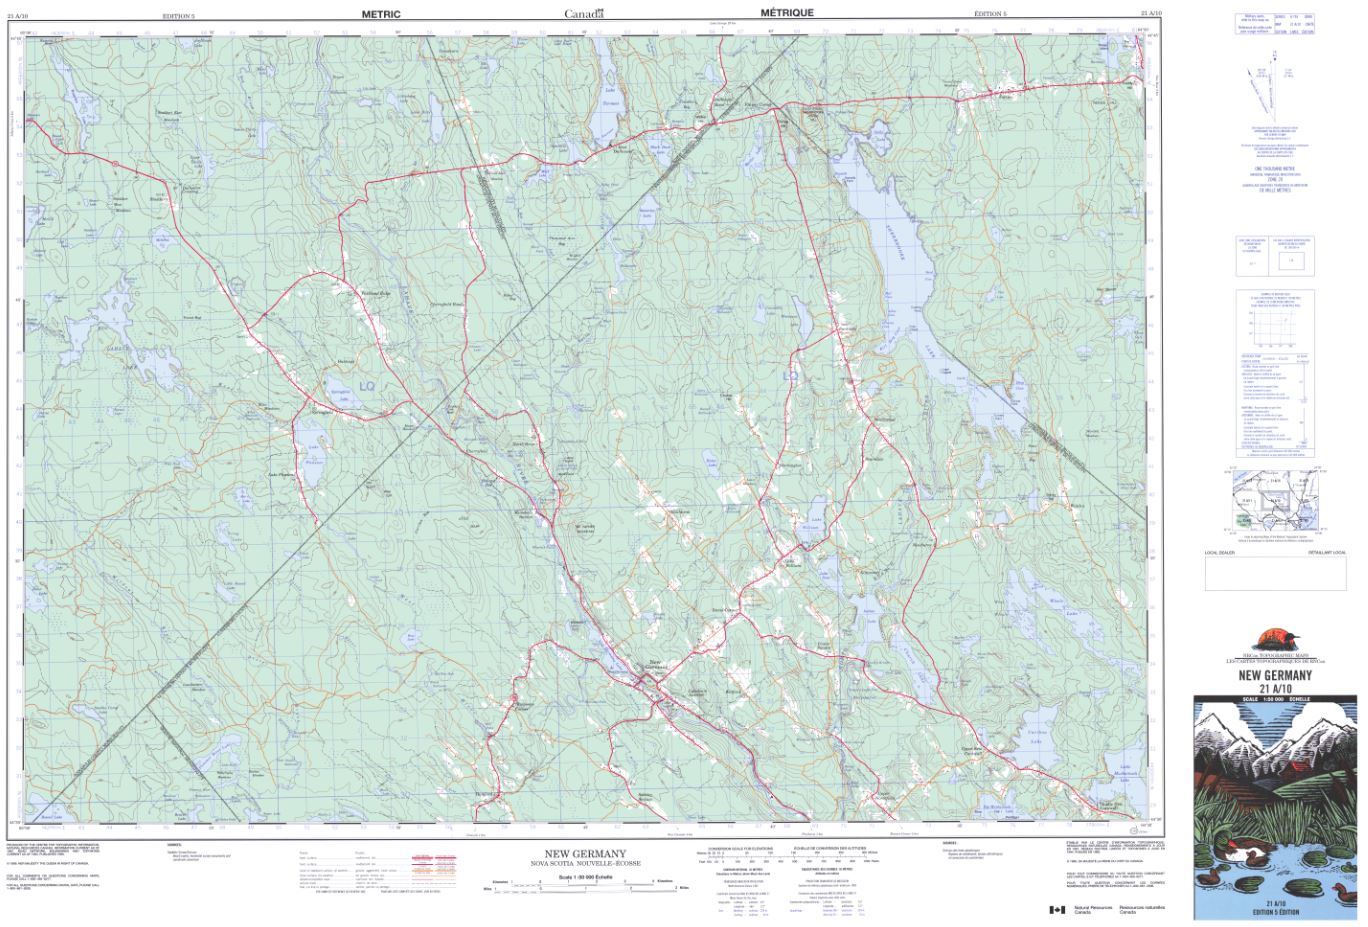 21A/10 New Germany Topographic Map Nova Scotia